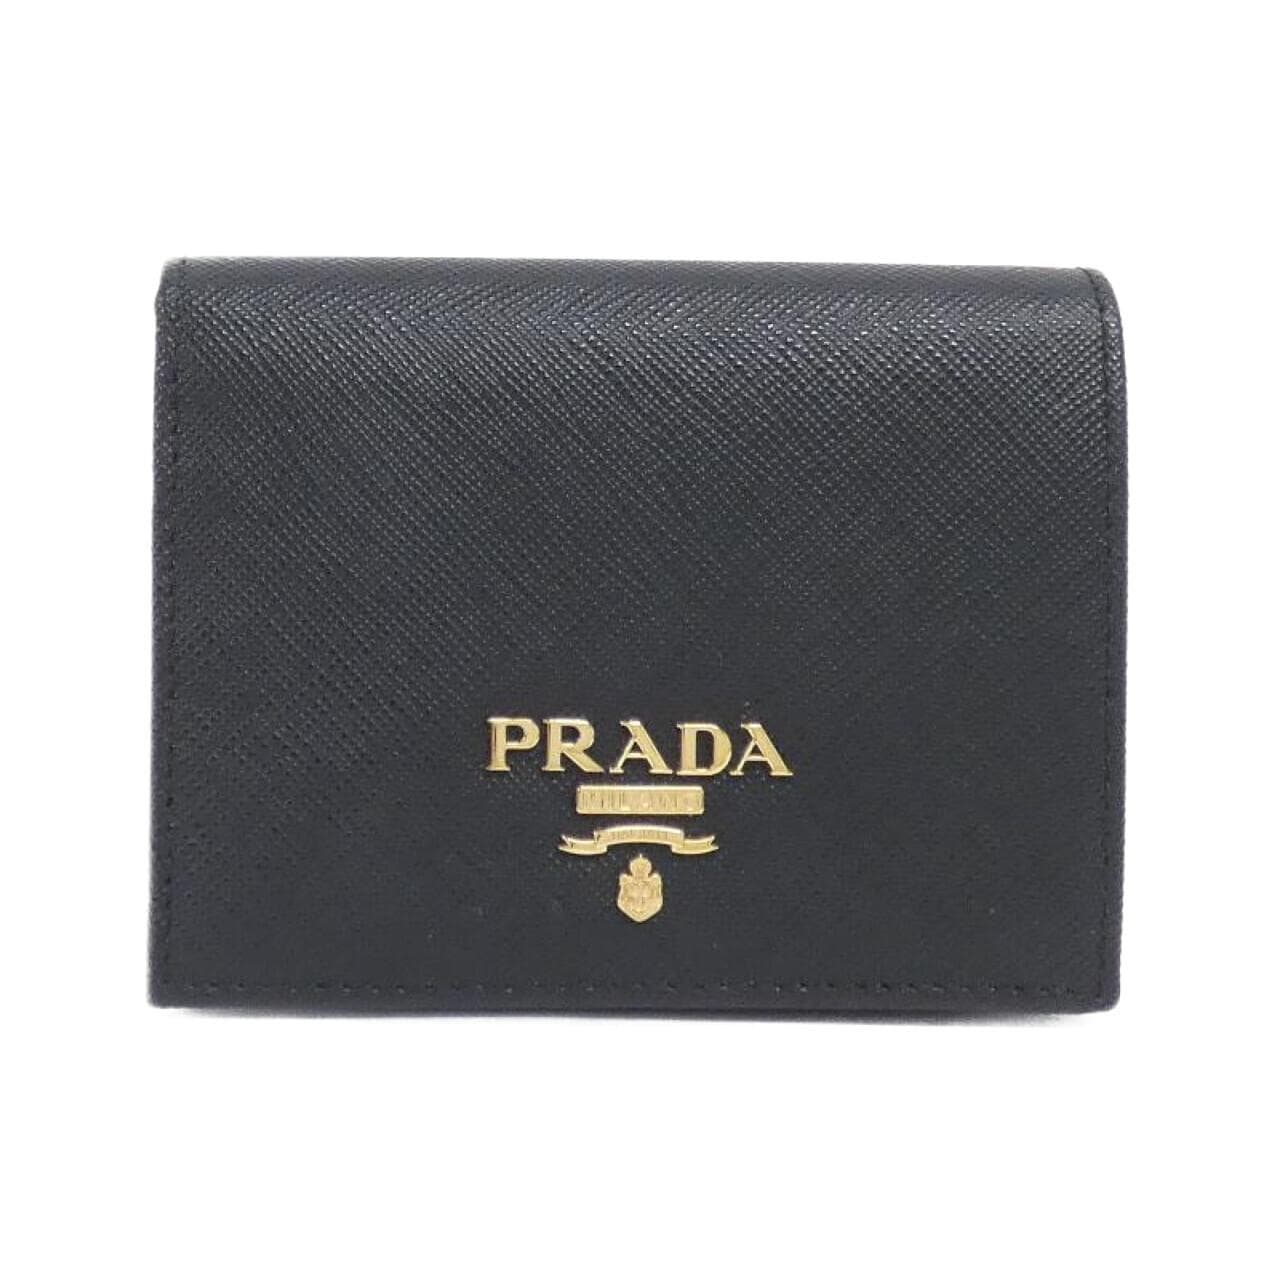 prada 1MV204 wallet